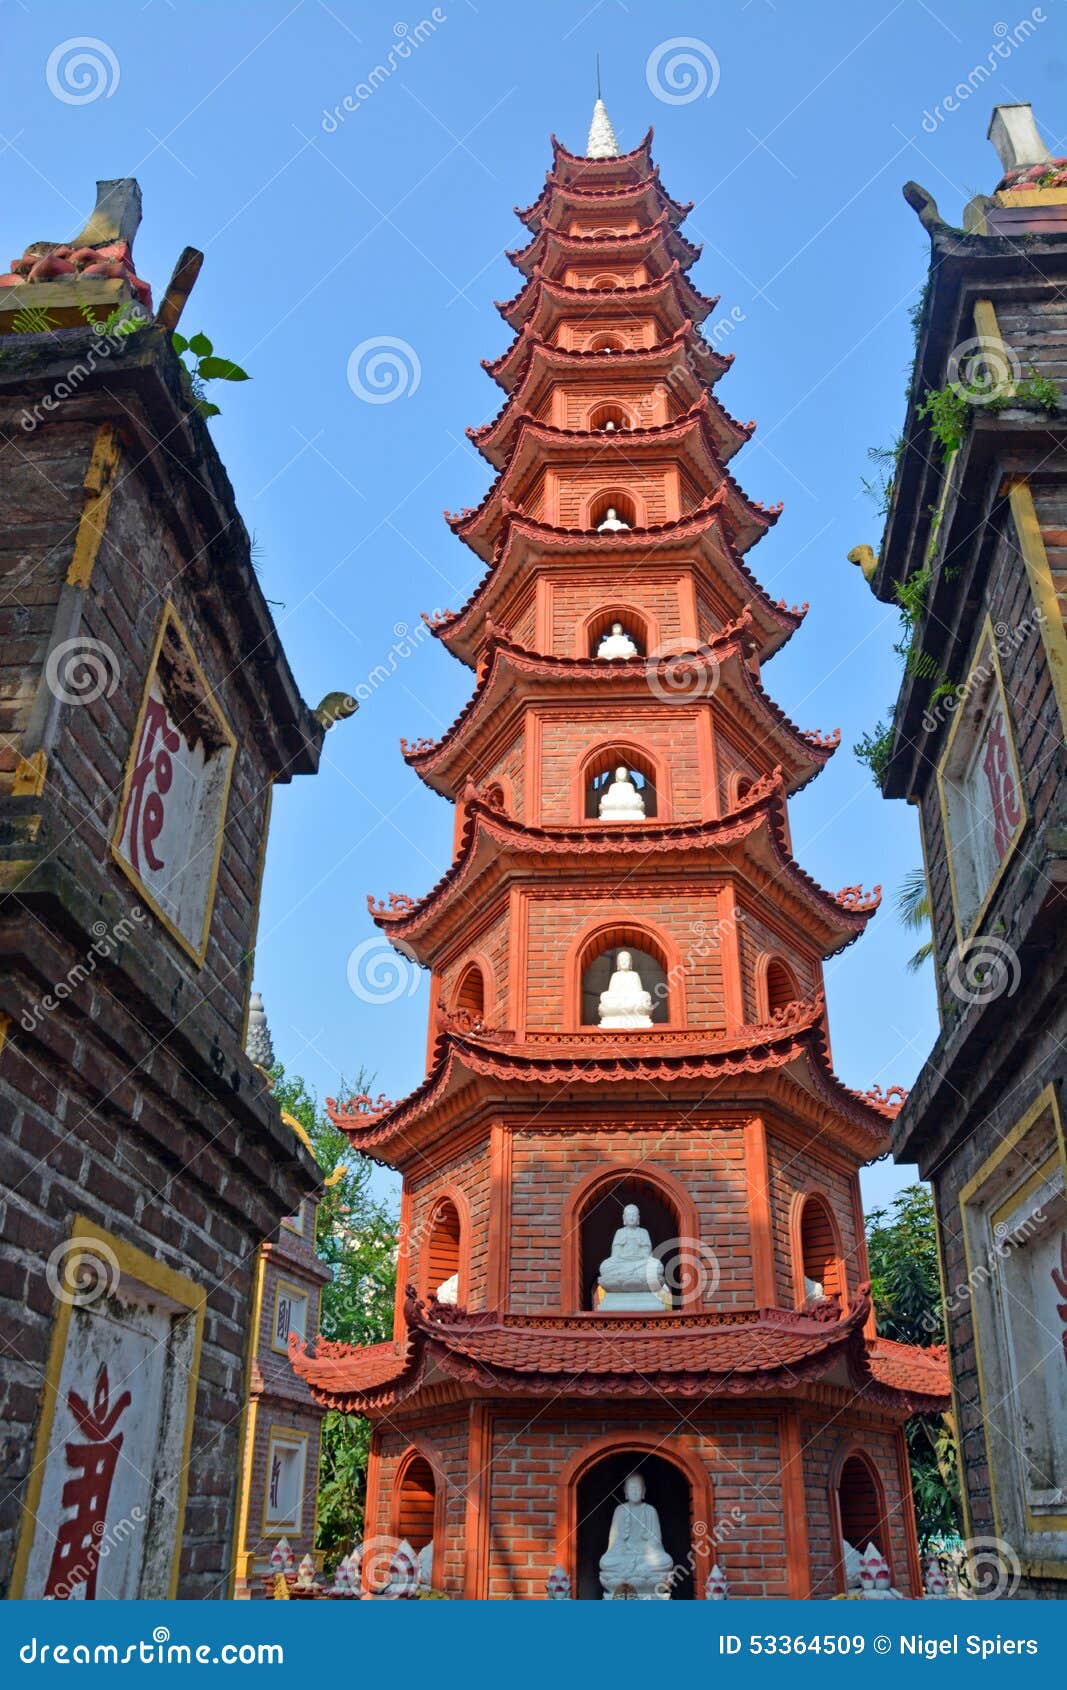 tran quoc pagoda west lake, hanoi